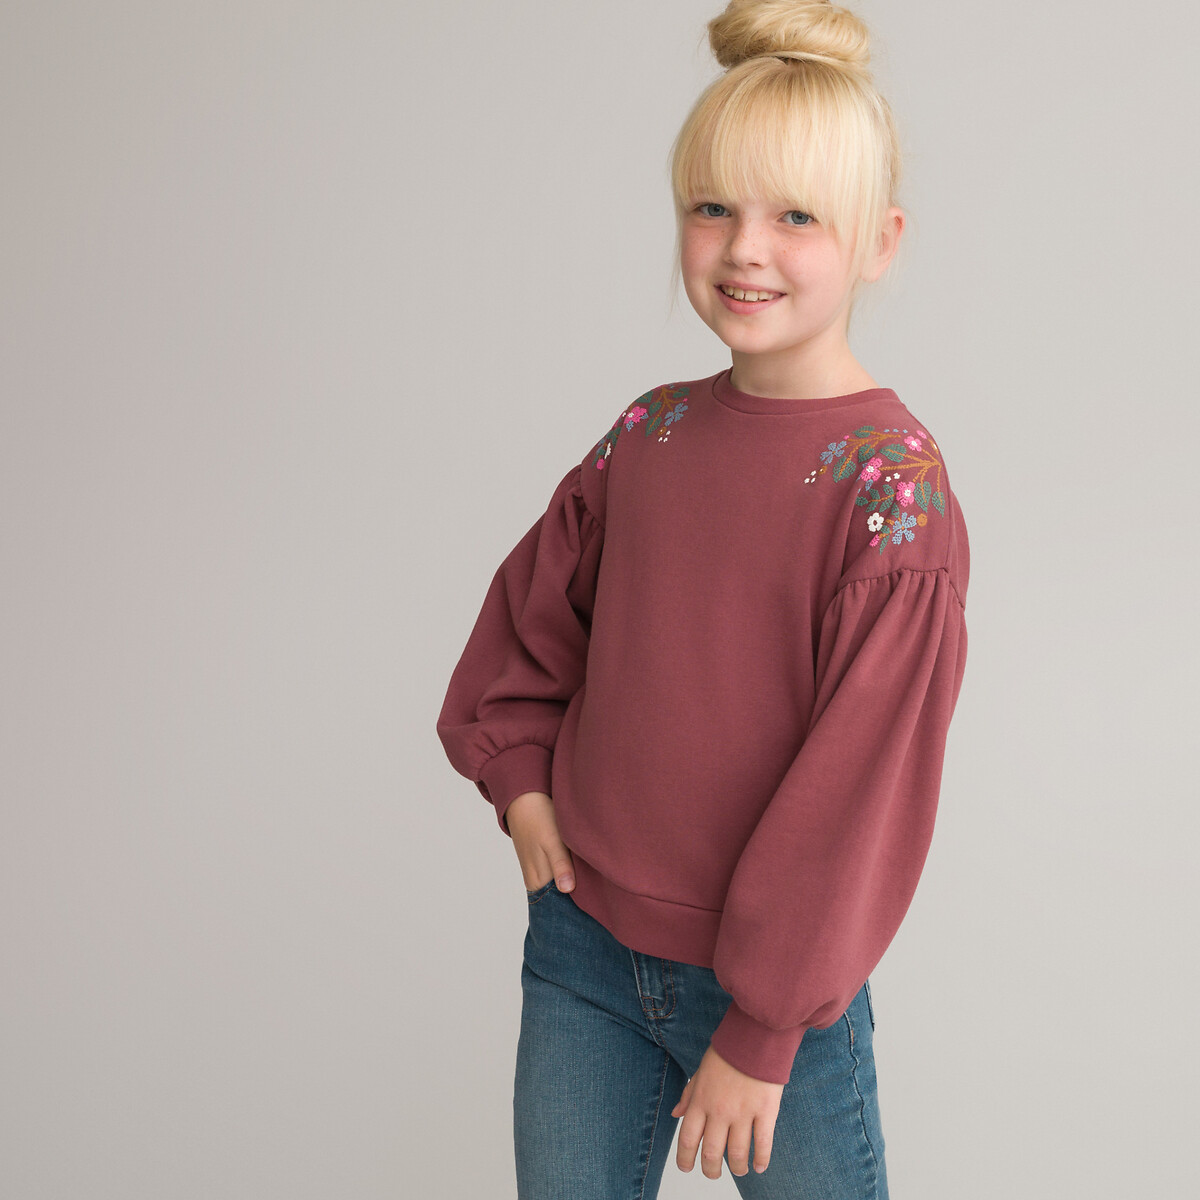 Hollywood Star Fashion Khanomak Kids Girl Crew Neck Cardigan Sweater Sizes 3T- 14 Yrs 